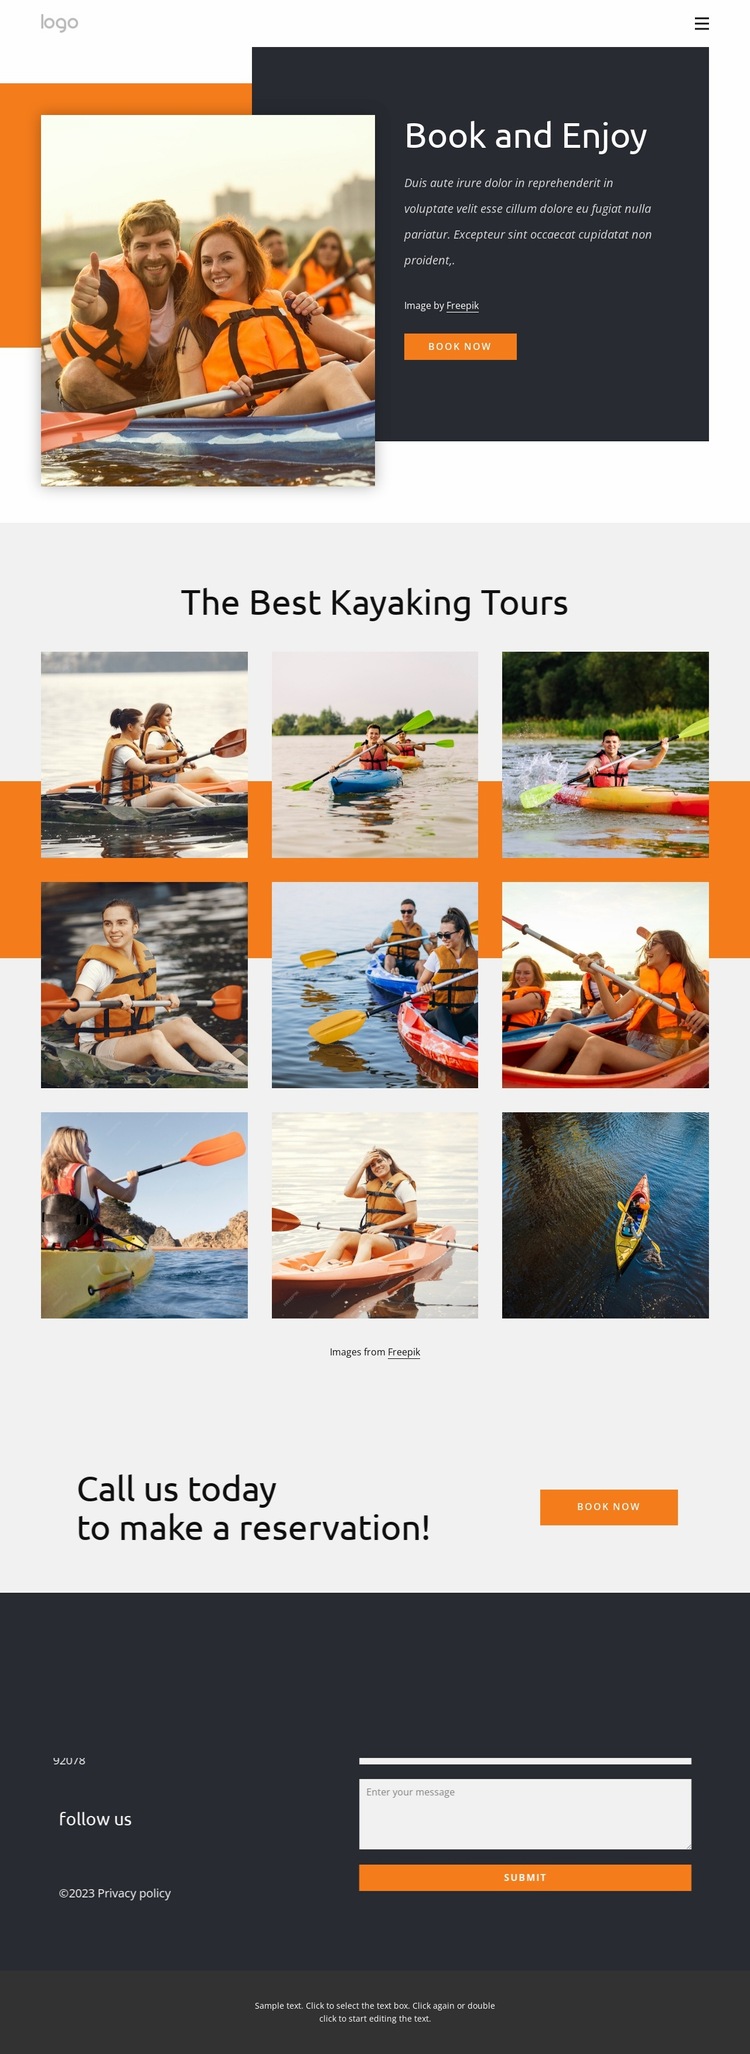 Kayaking tours and holidays Website Builder Templates